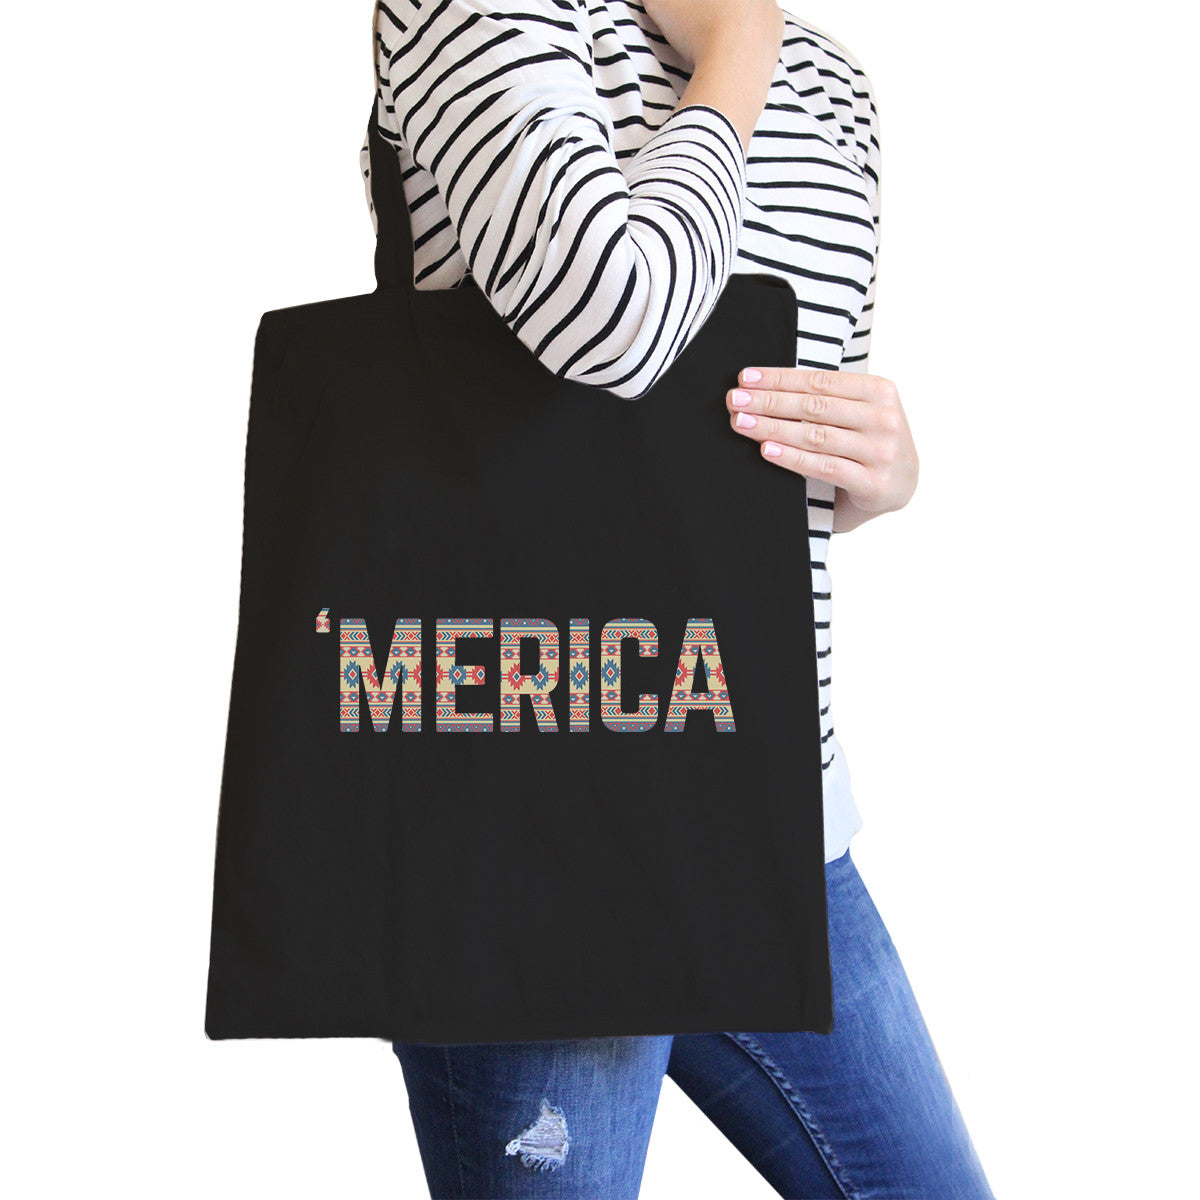 With 'merica Black Canvas Bag Tribal Pattern America Letteri